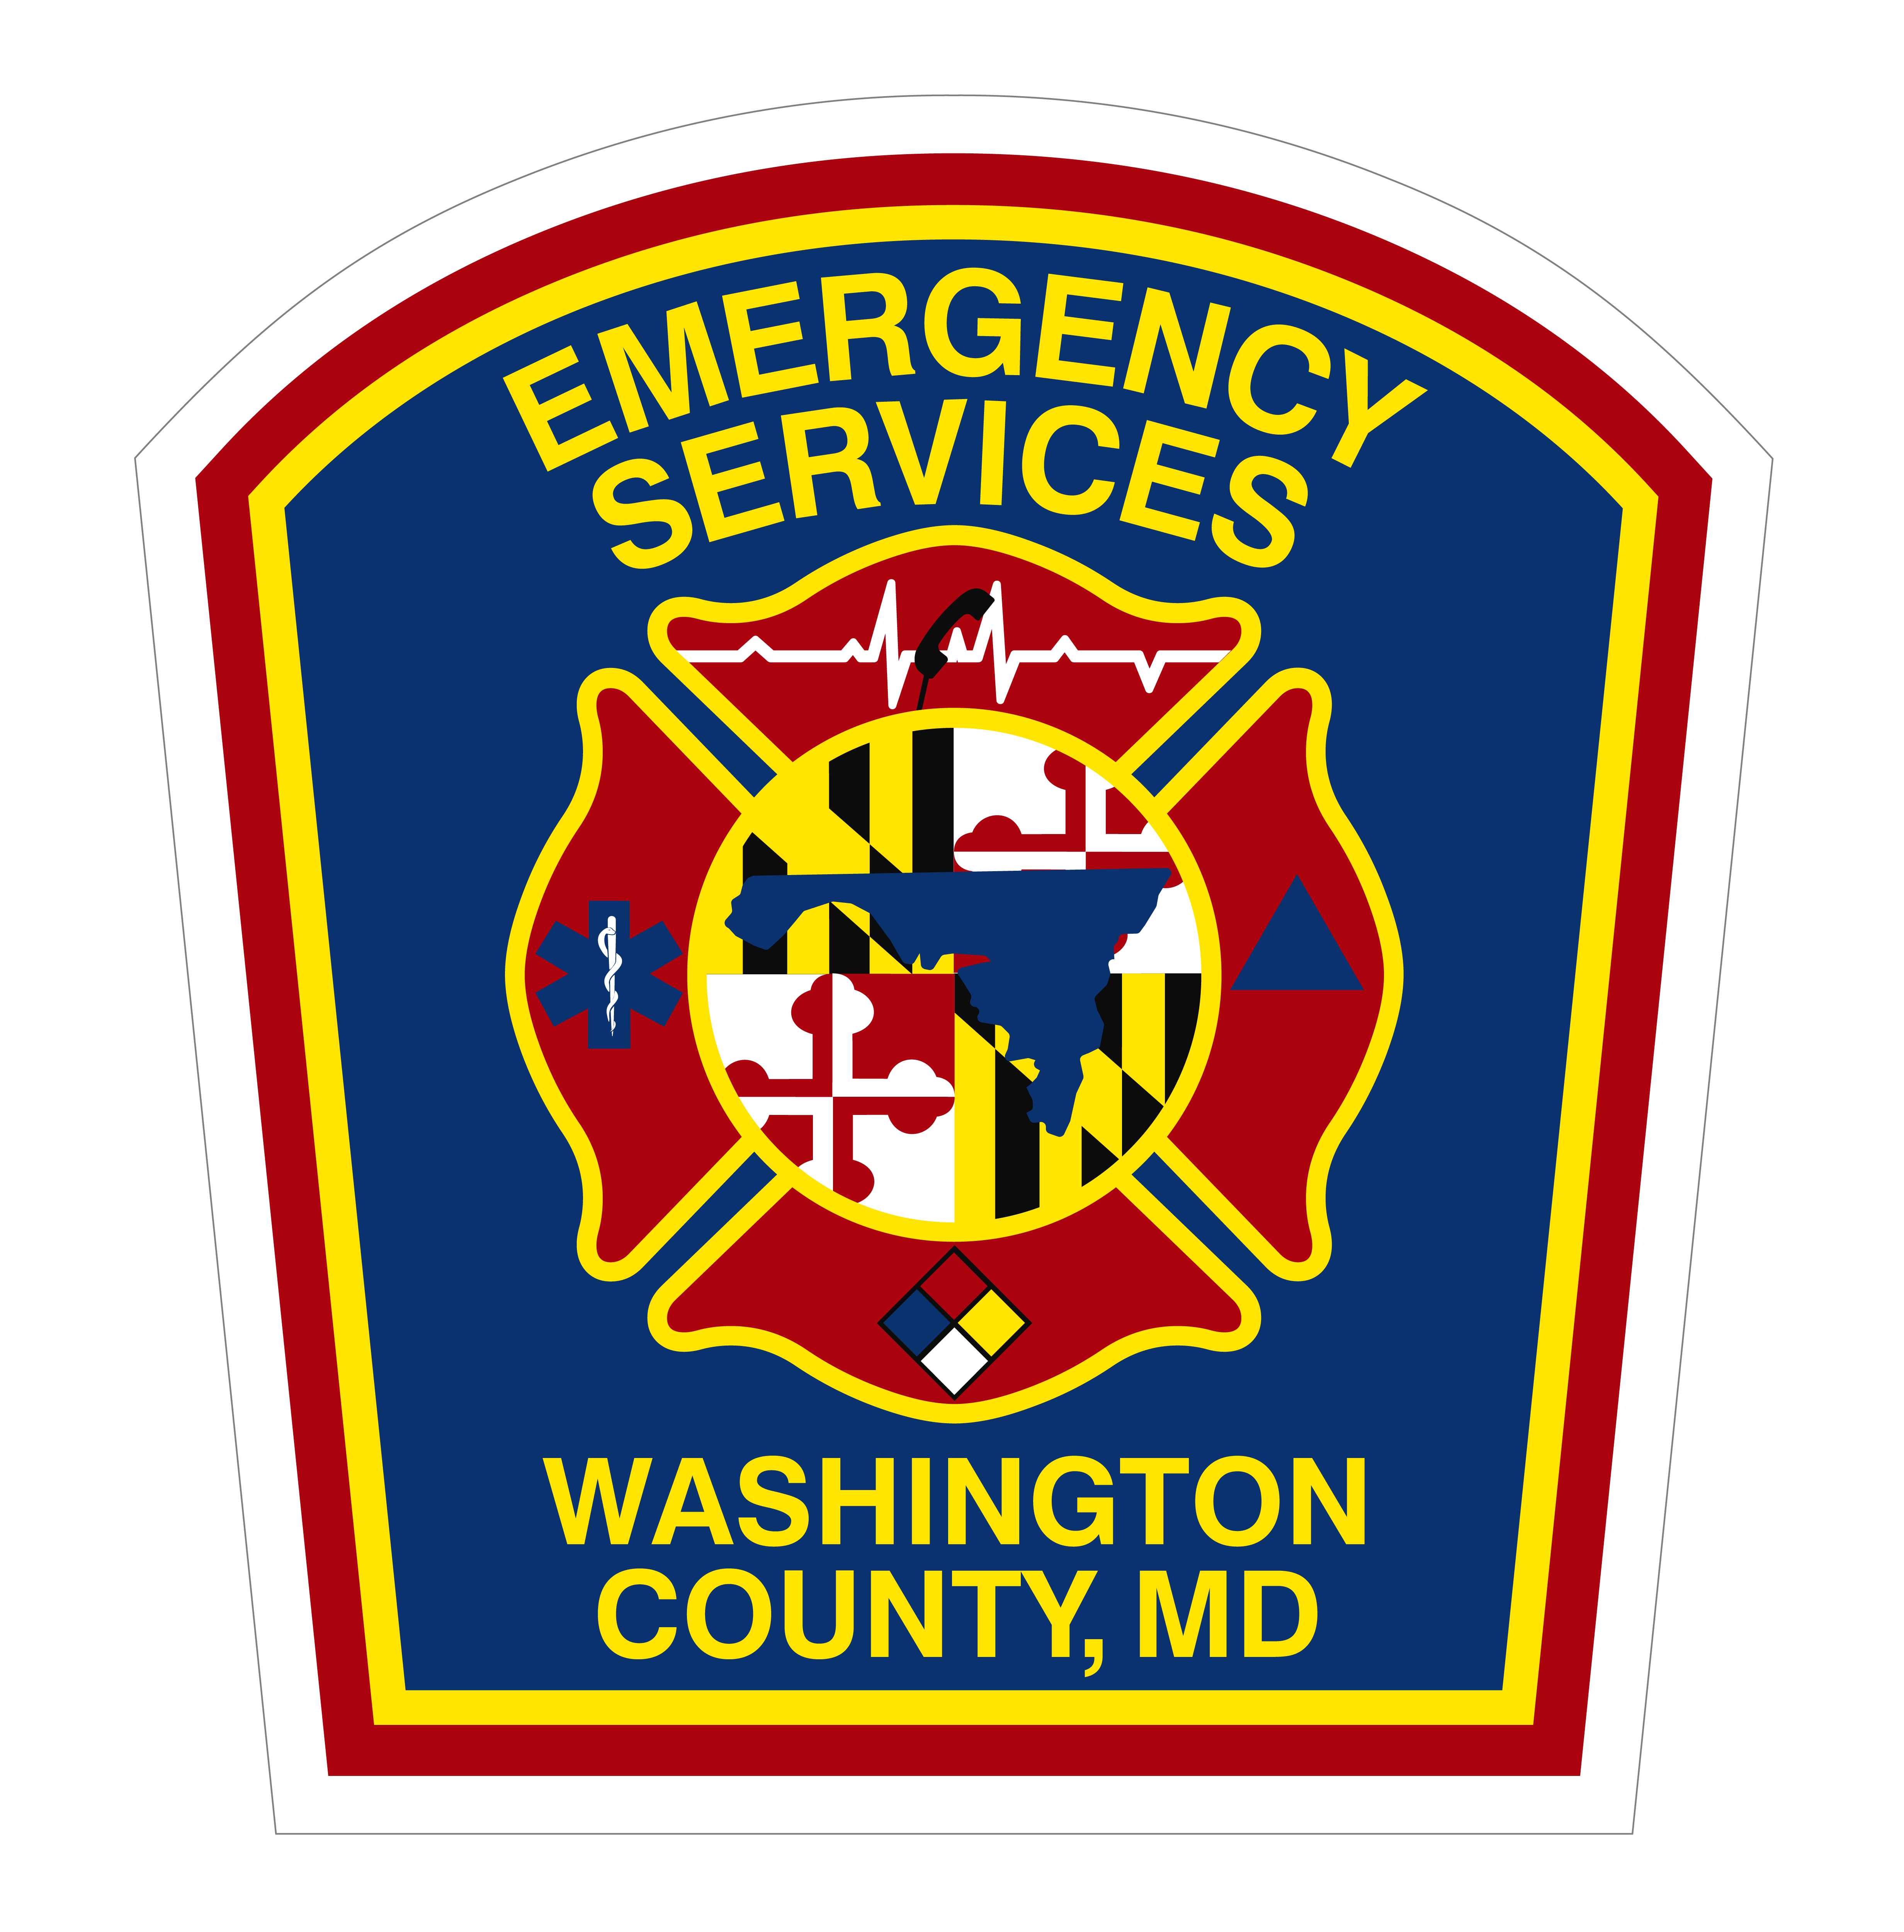 Emergency Services logo